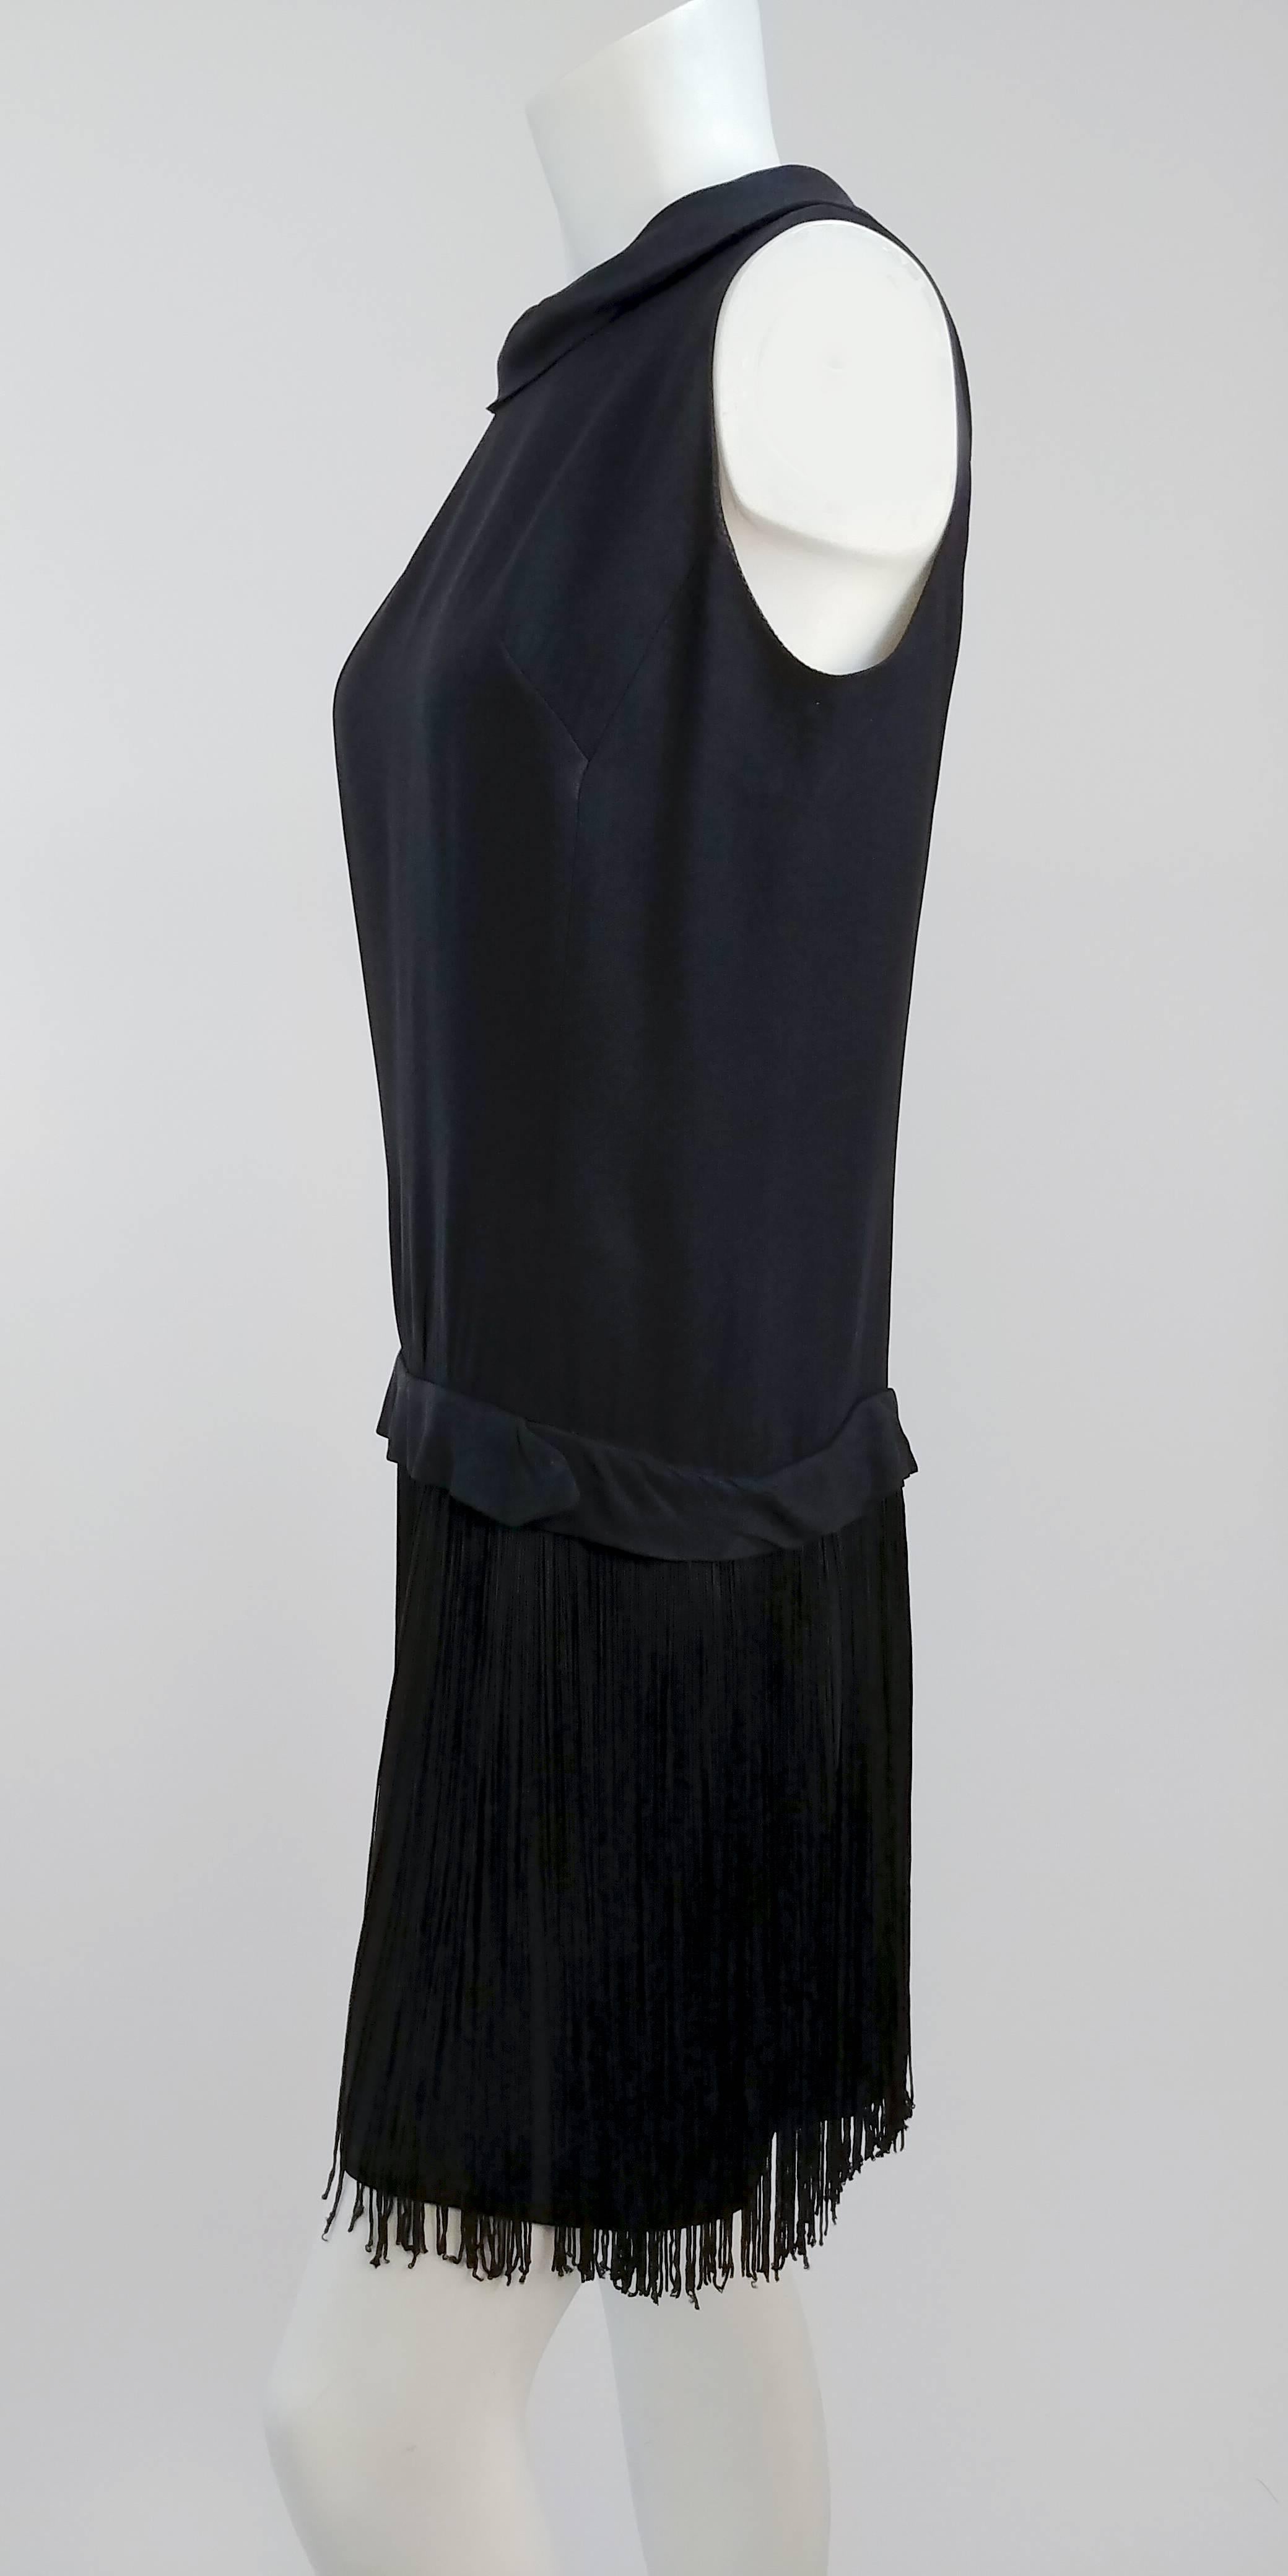 1960s Drop Waist Fringe Cocktail Dress. Fully faced. Back zip closure.